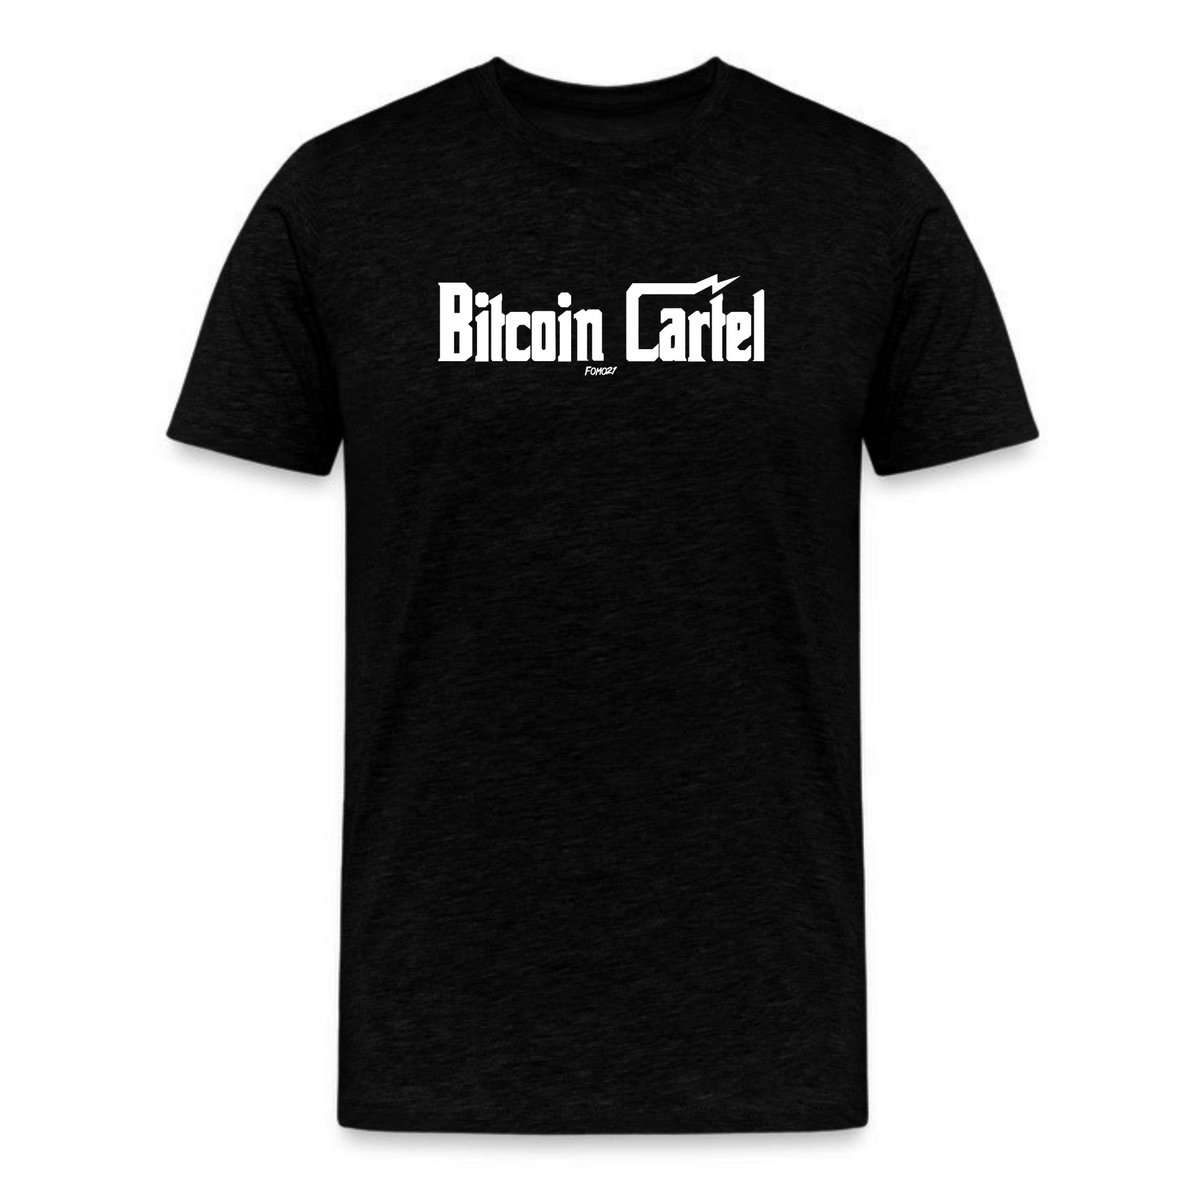 Bitcoin Cartel T-Shirt - fomo21